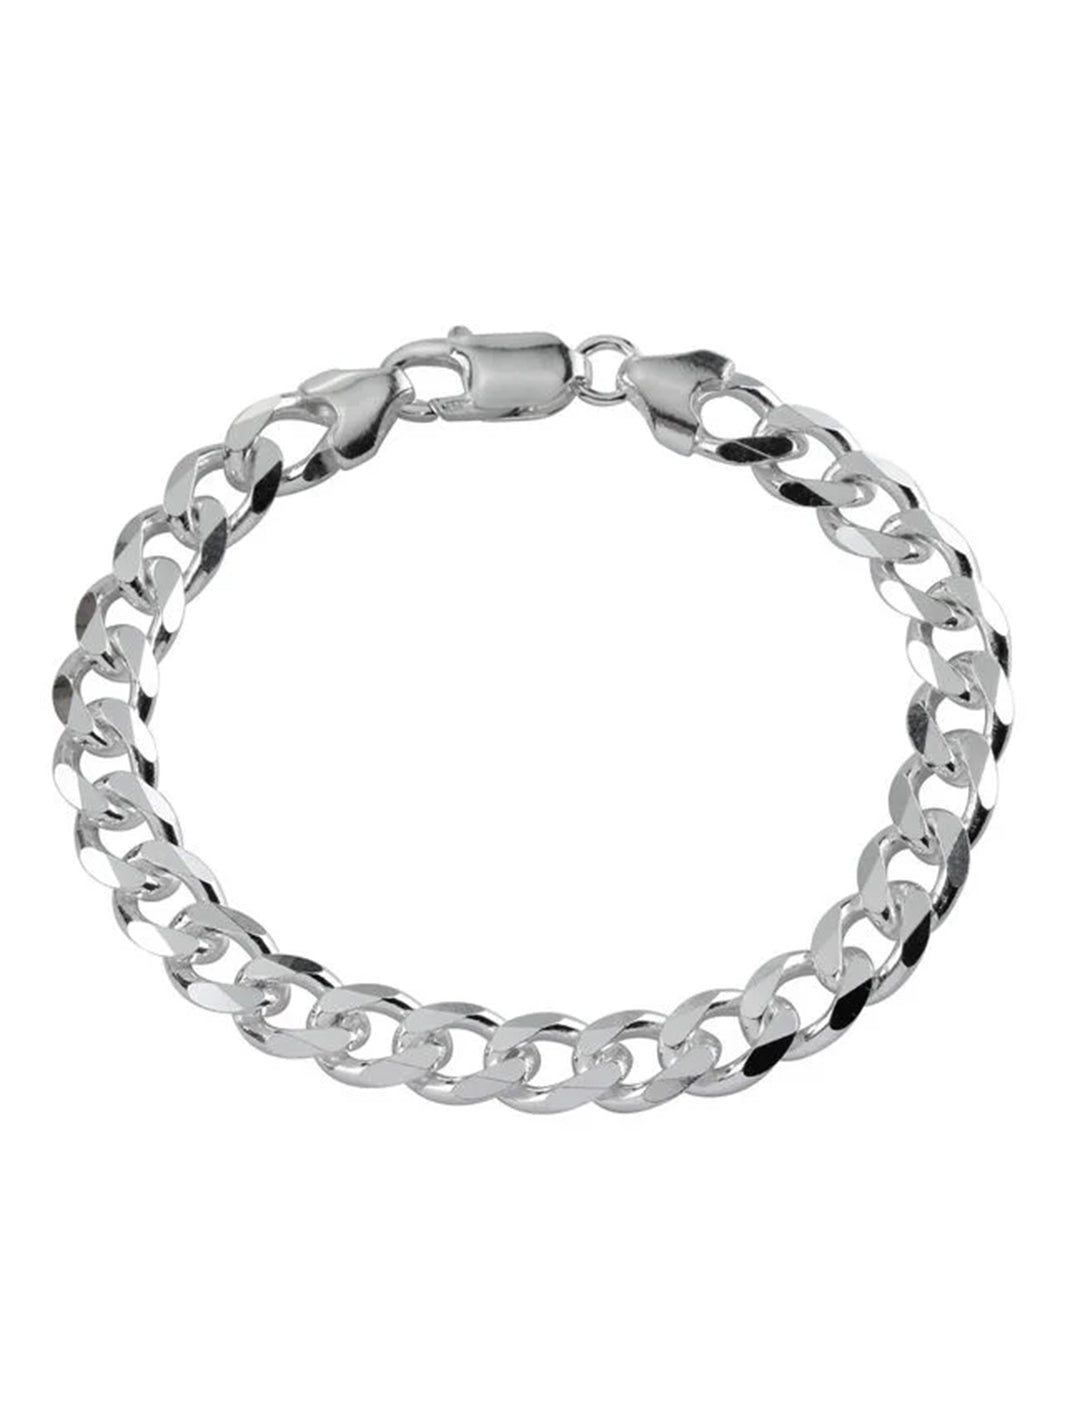 Silver Mens Bracelet Chain 7mm Curb Link Chain Bracelet Mens Woman Chain, Mens  Silver Bracelet Link Chains, Thick Thin Curb Bracelets - Etsy